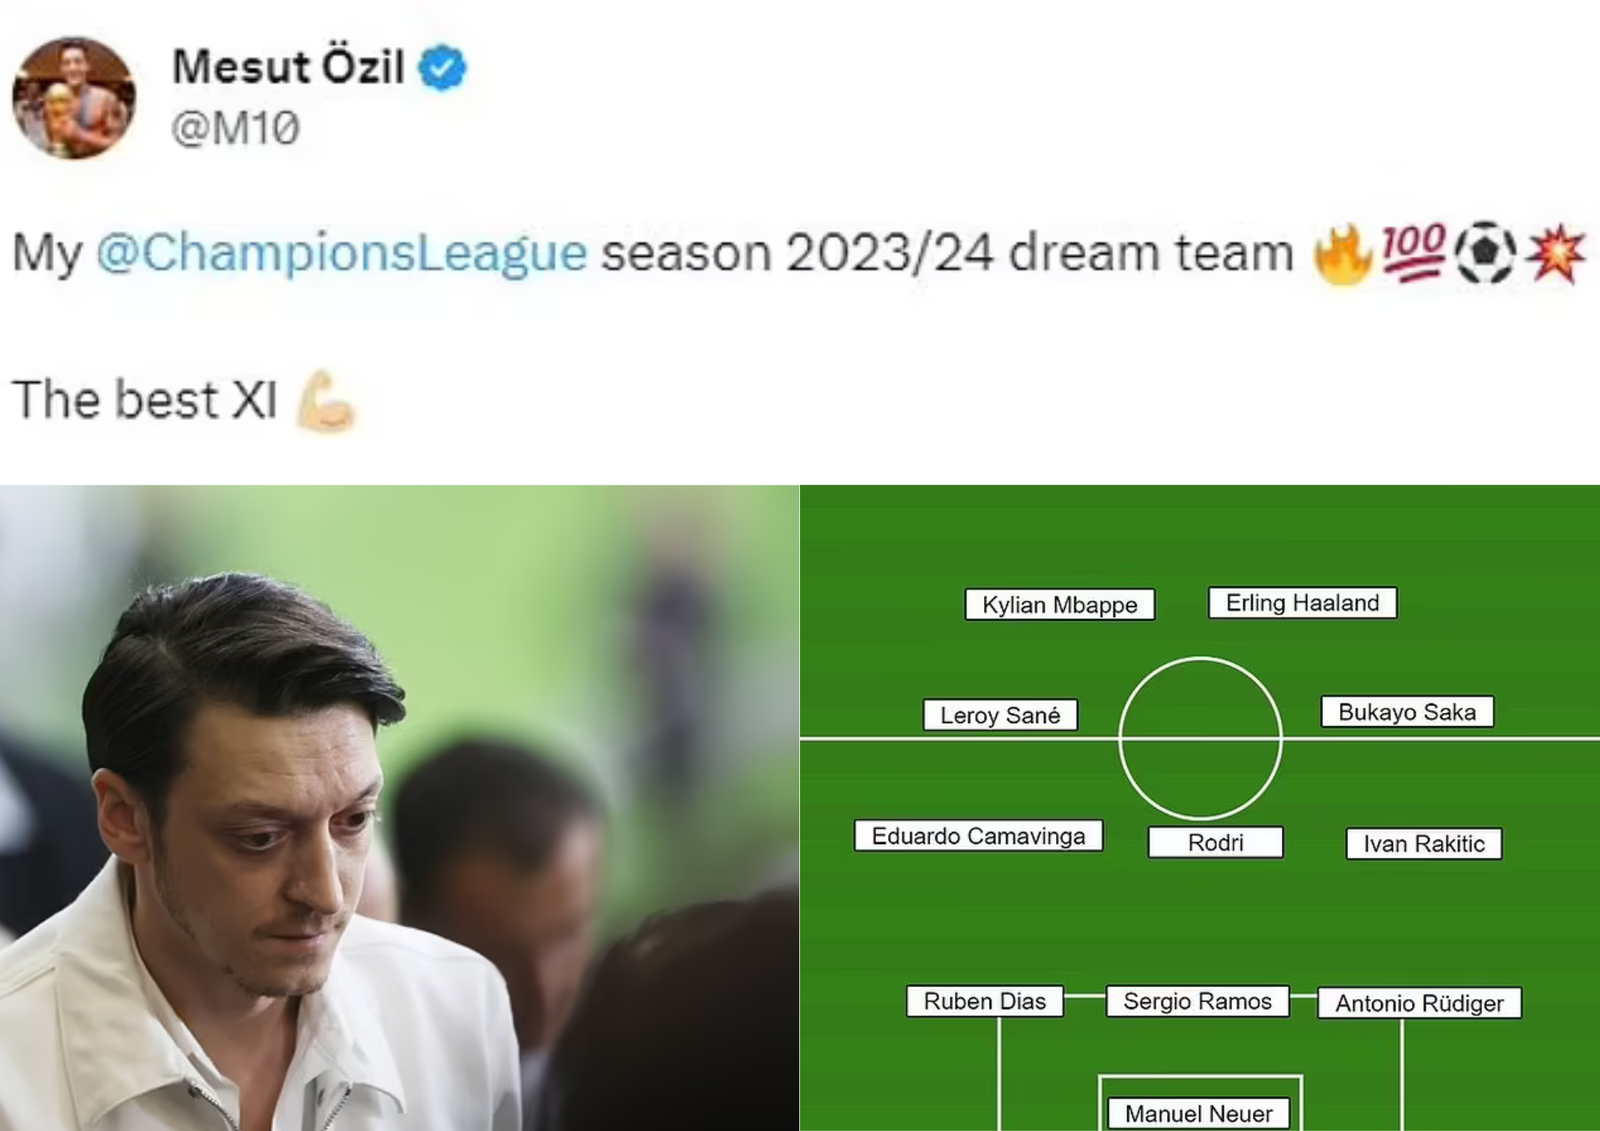 Mesut Ozil Reveals His Champions League Dream Team, Highlights Unconventional Choices